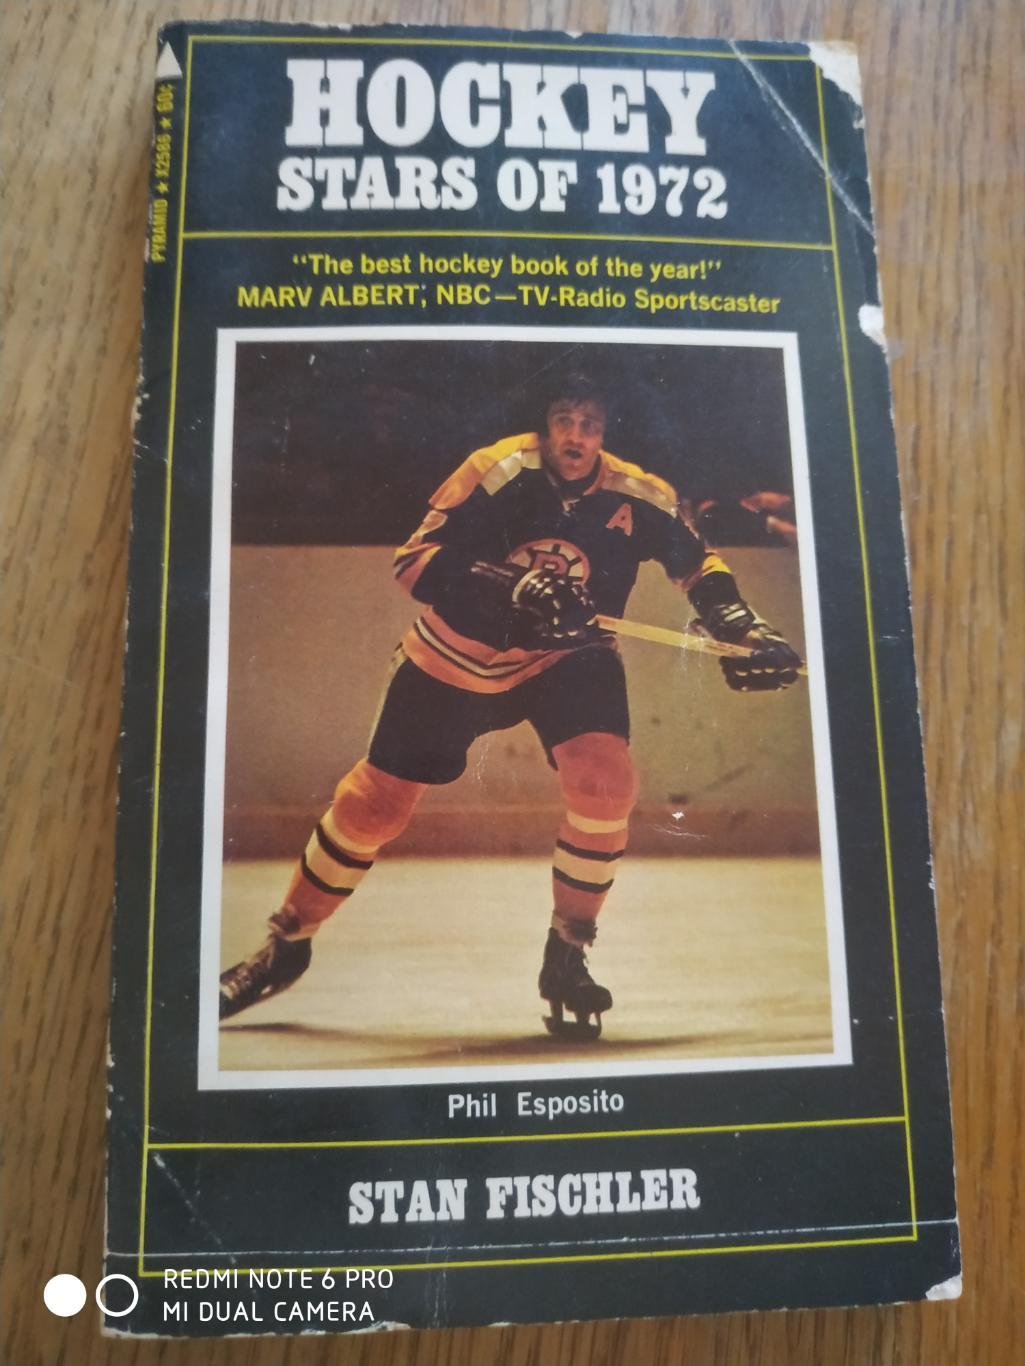 ХОККЕЙ СПРАВОЧНИК НХЛ NHL 1972 HOCKEY STARS OF 1972 by STAN FISCHLER